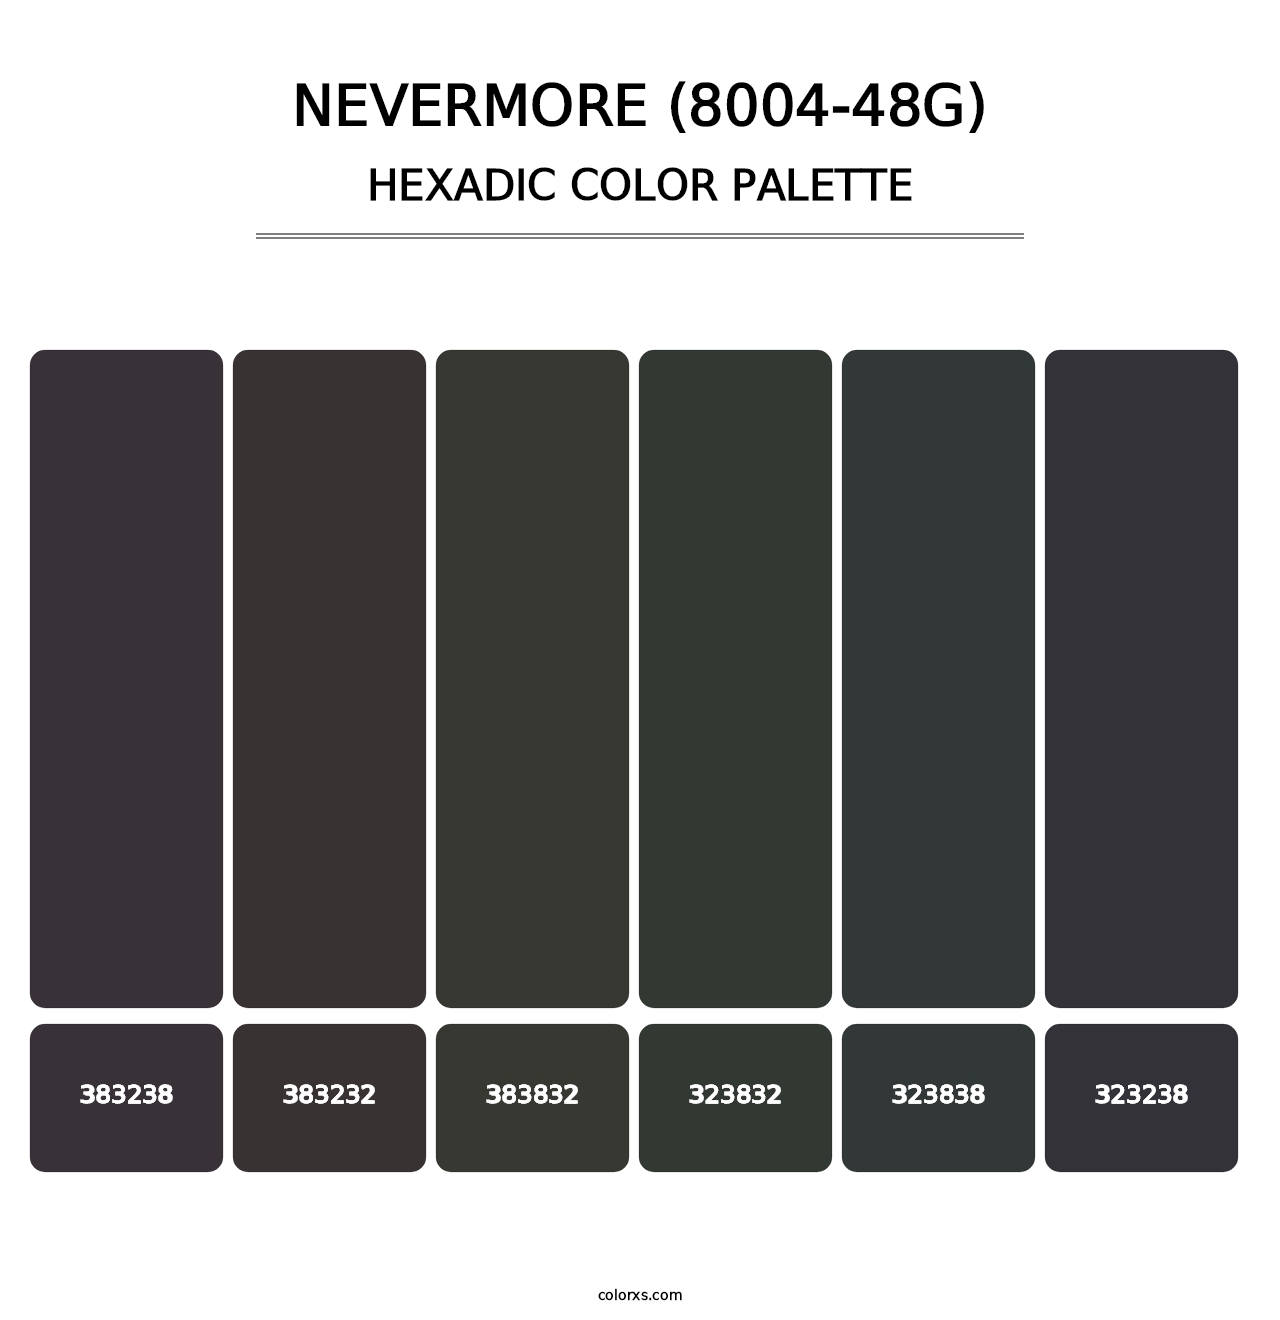 Nevermore (8004-48G) - Hexadic Color Palette